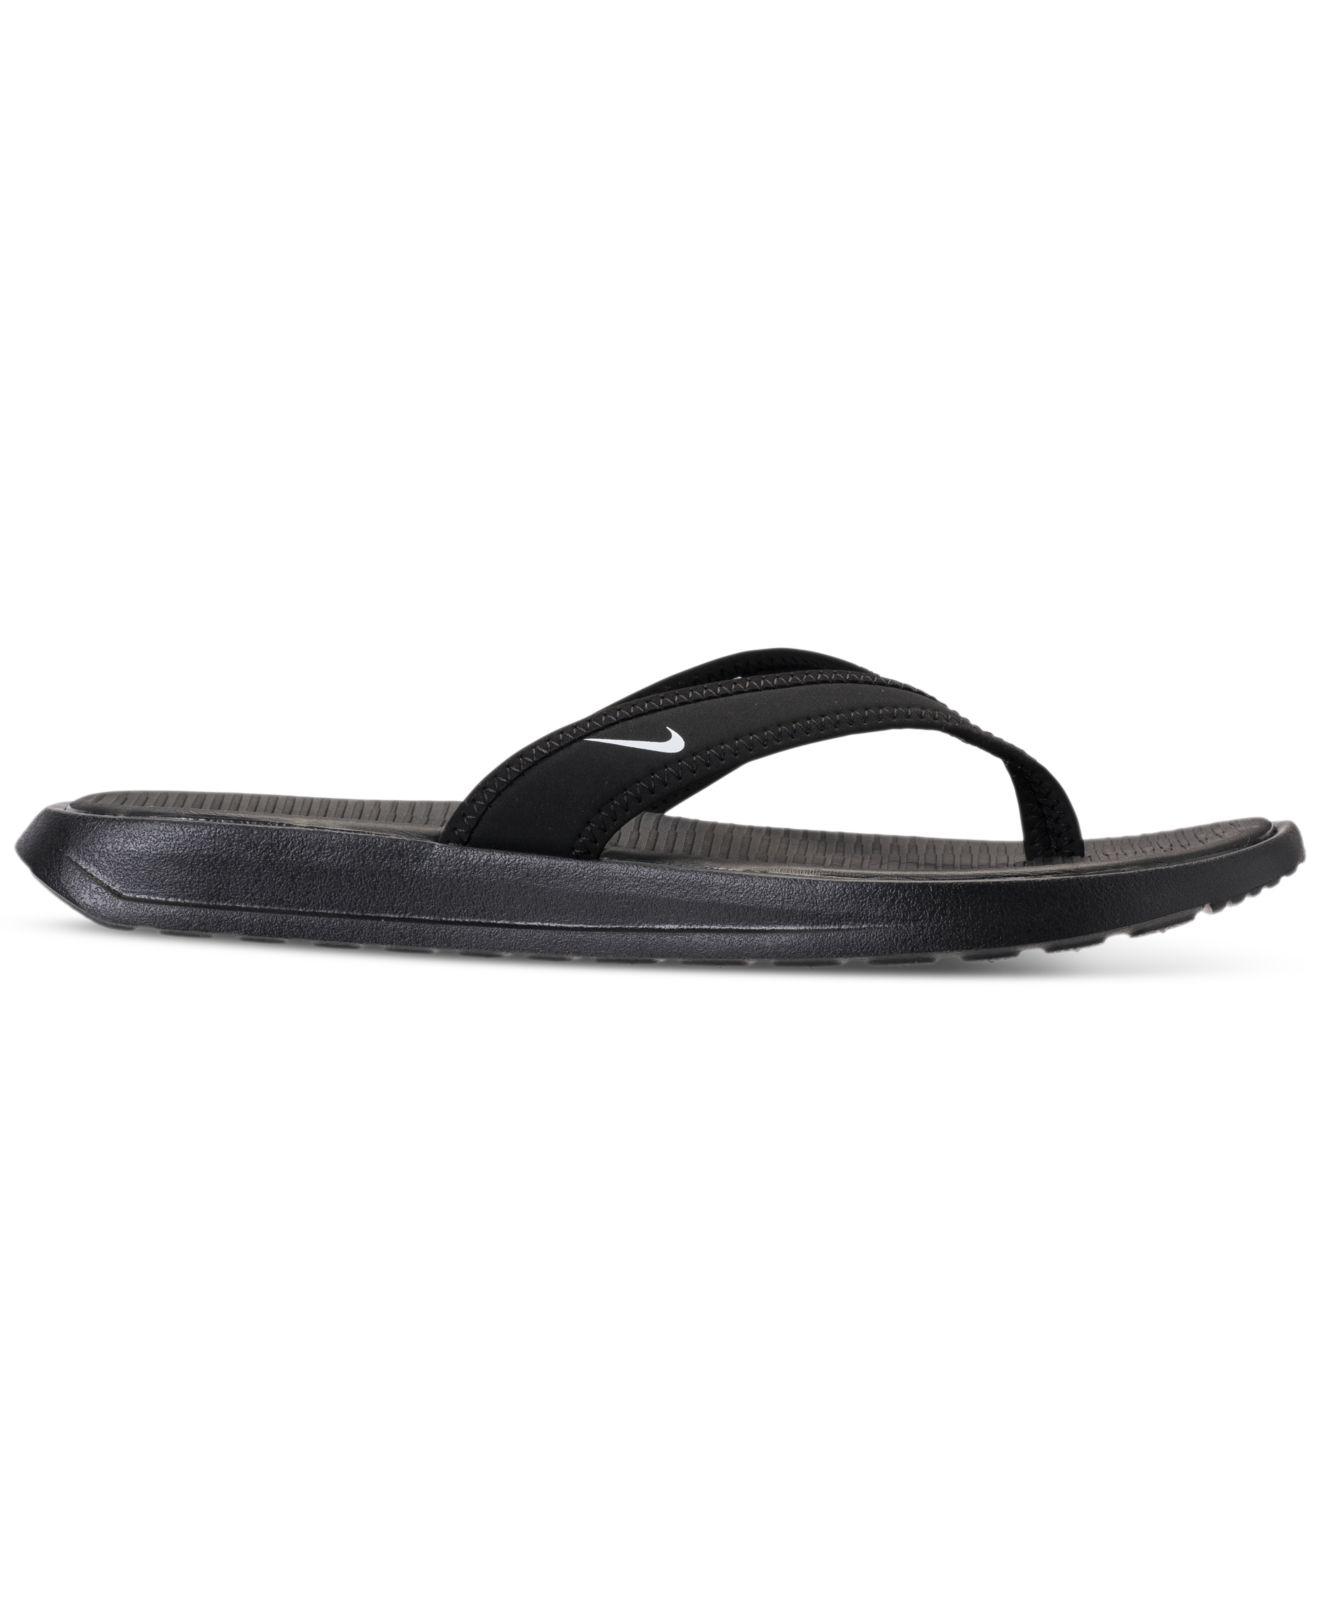 https://cdna.lystit.com/photos/macys/ee0e620e/nike-BLACKWHITE-Ultra-Celso-Thong-Sandals-From-Finish-Line.jpeg